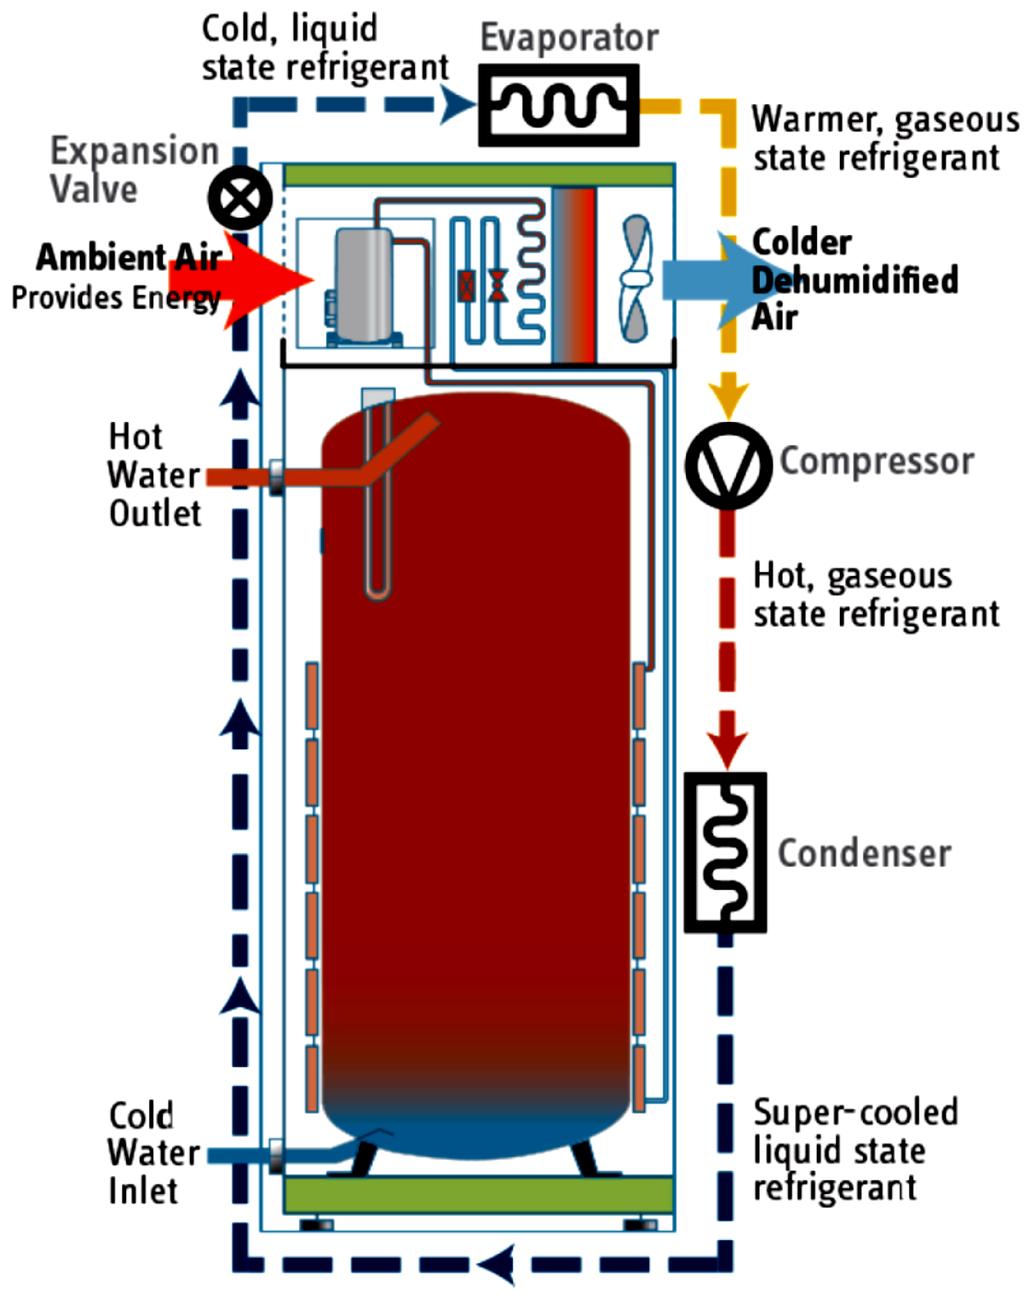 Figure 3-1: Heat pump water